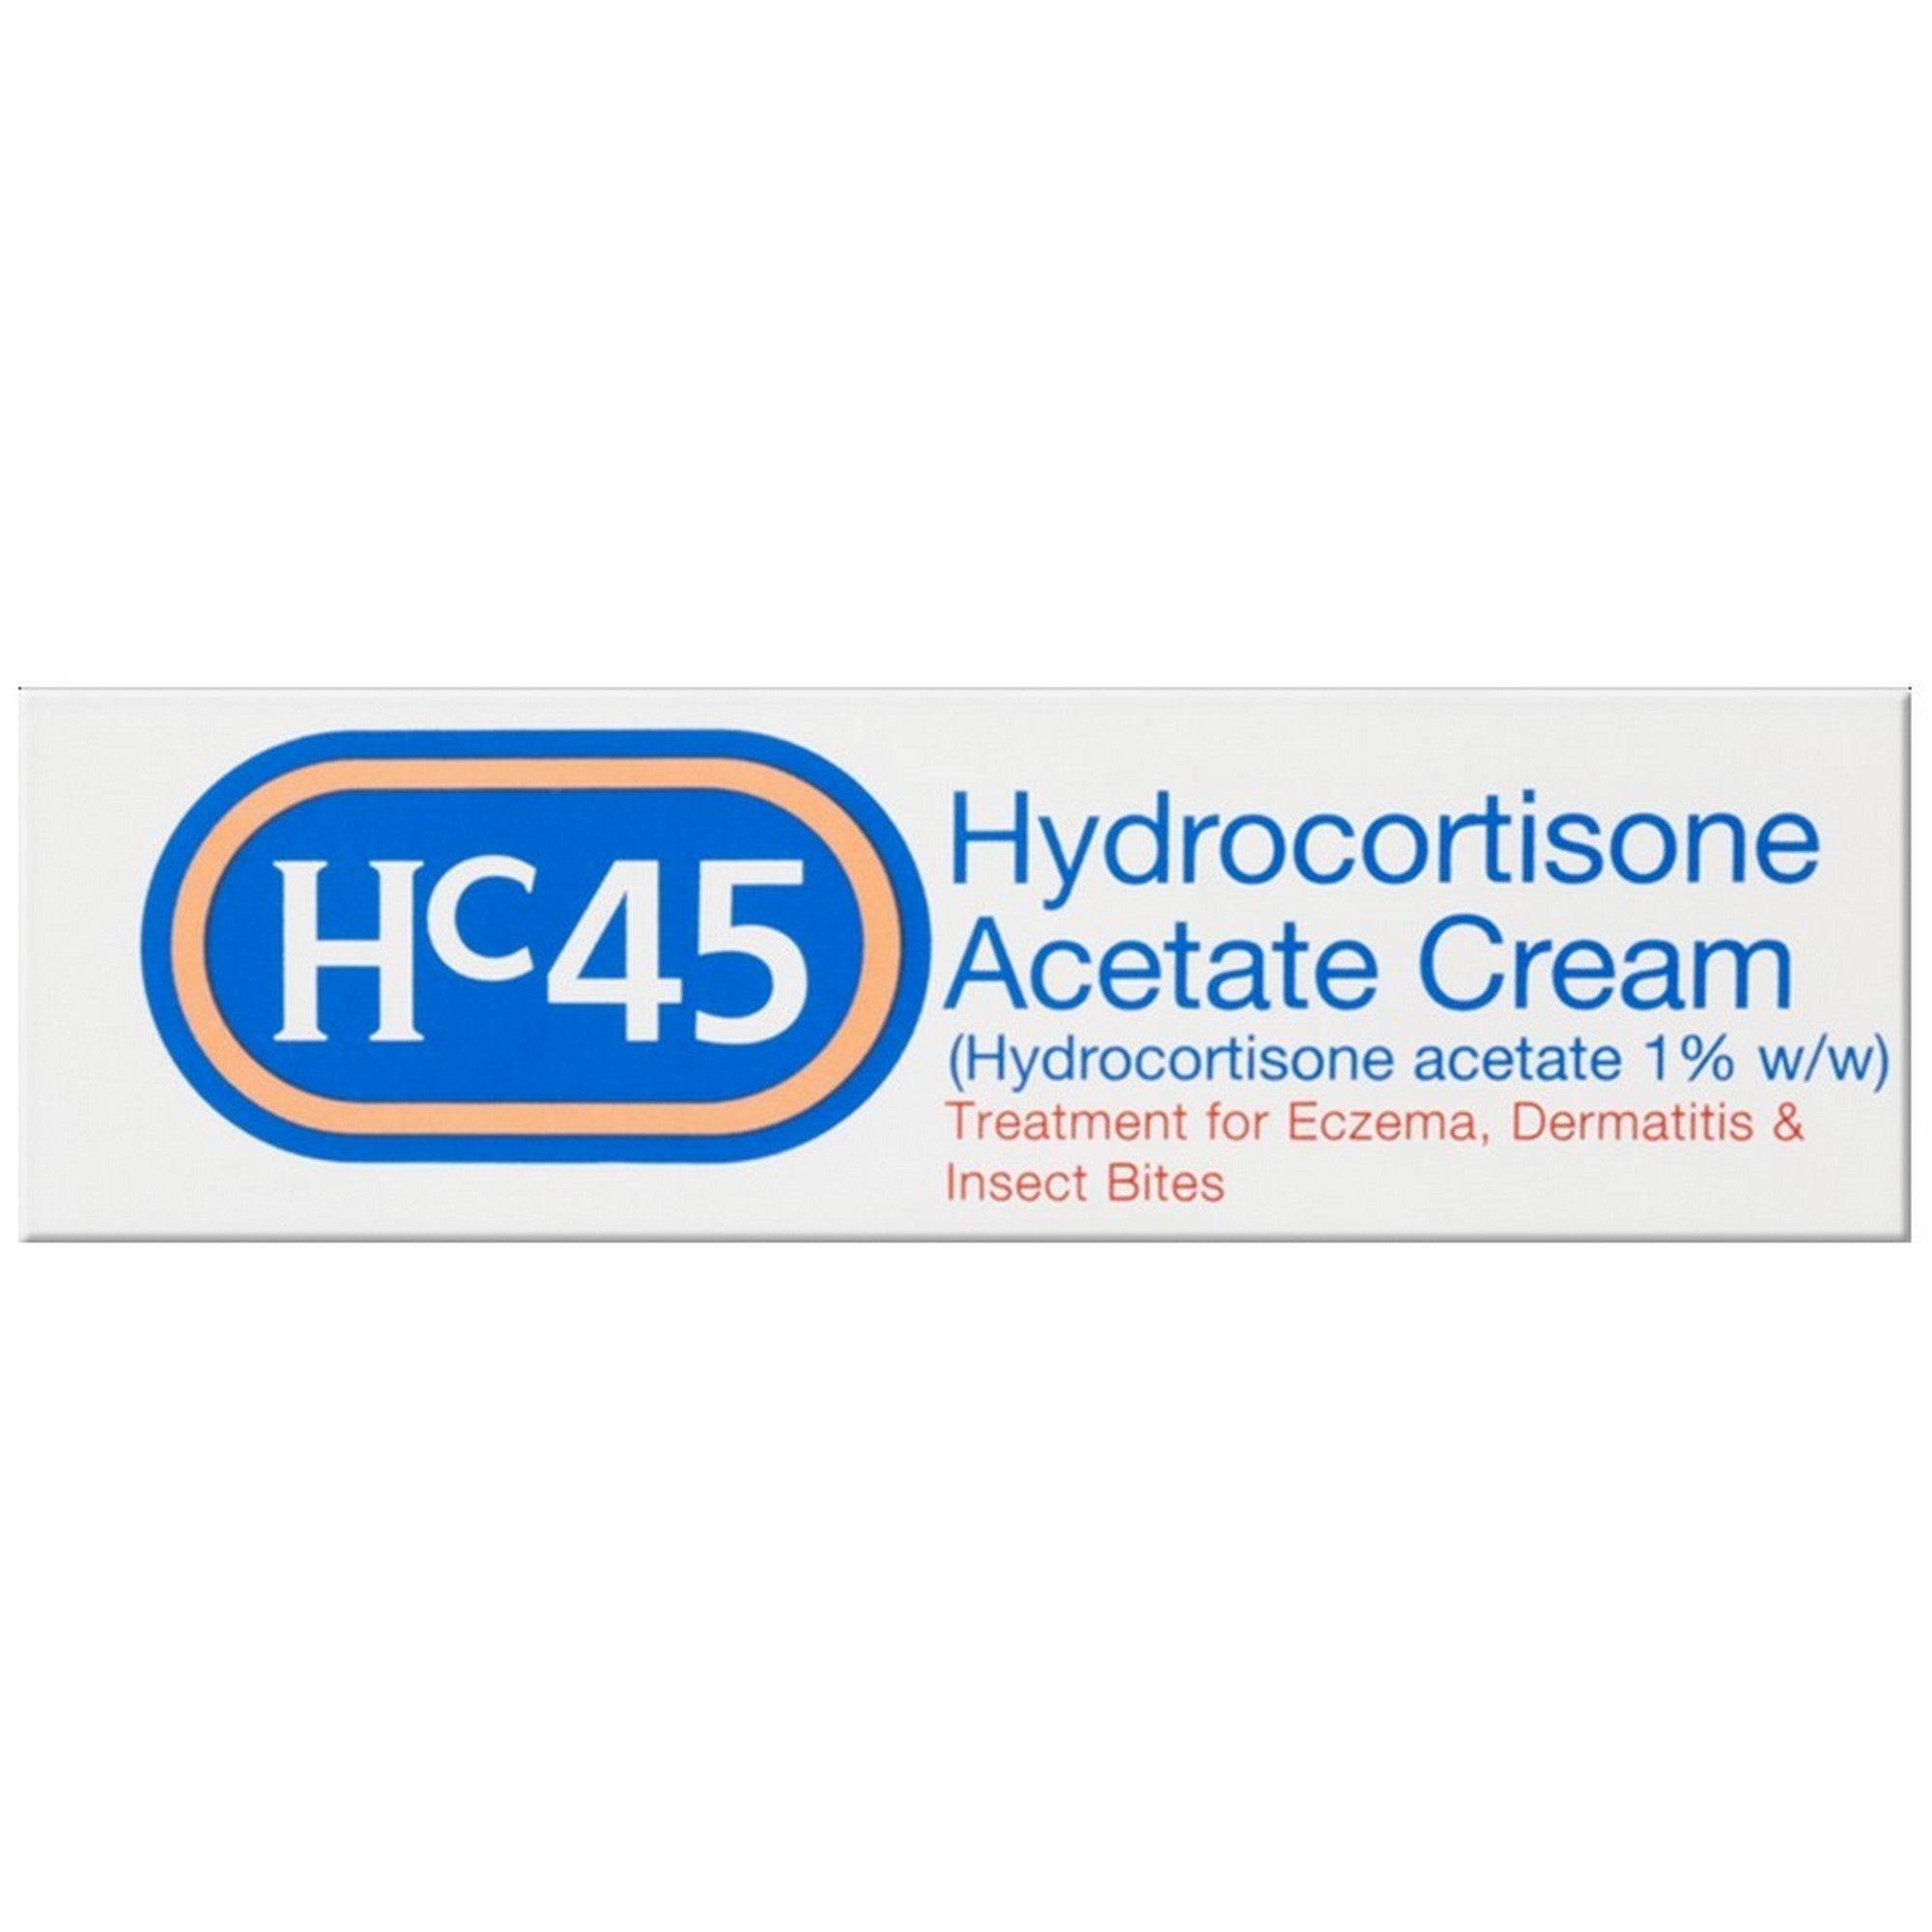 Hc45 Hydrocortisone Acetate Cream 1% w/w